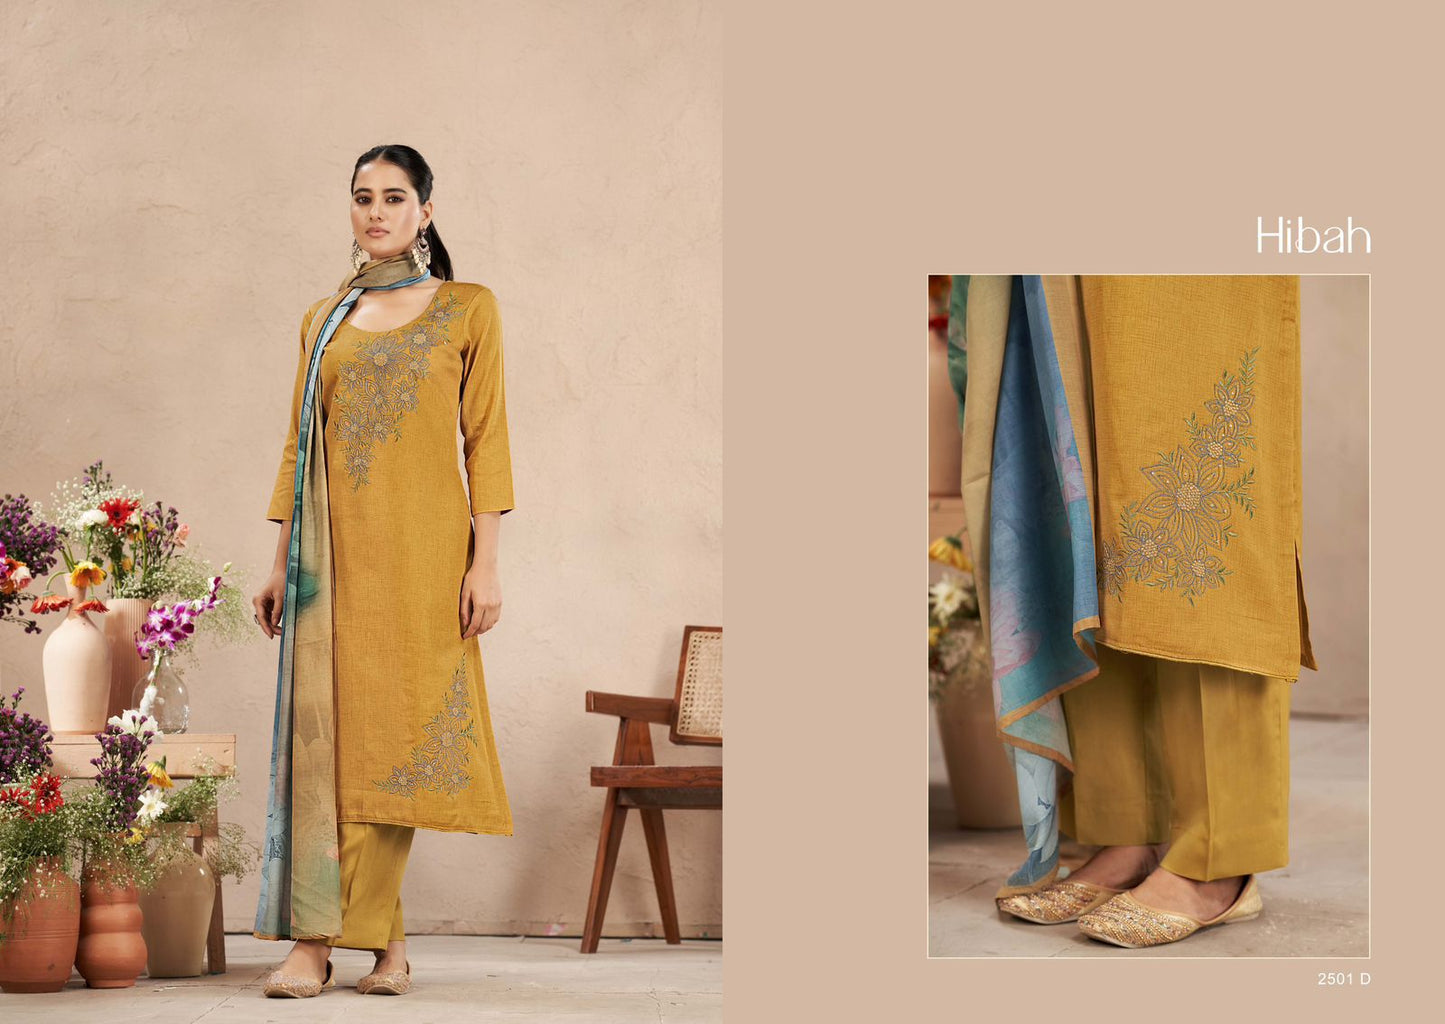 Hibah Sargam Prints Pure Jam Plazzo Style Suits Exporter